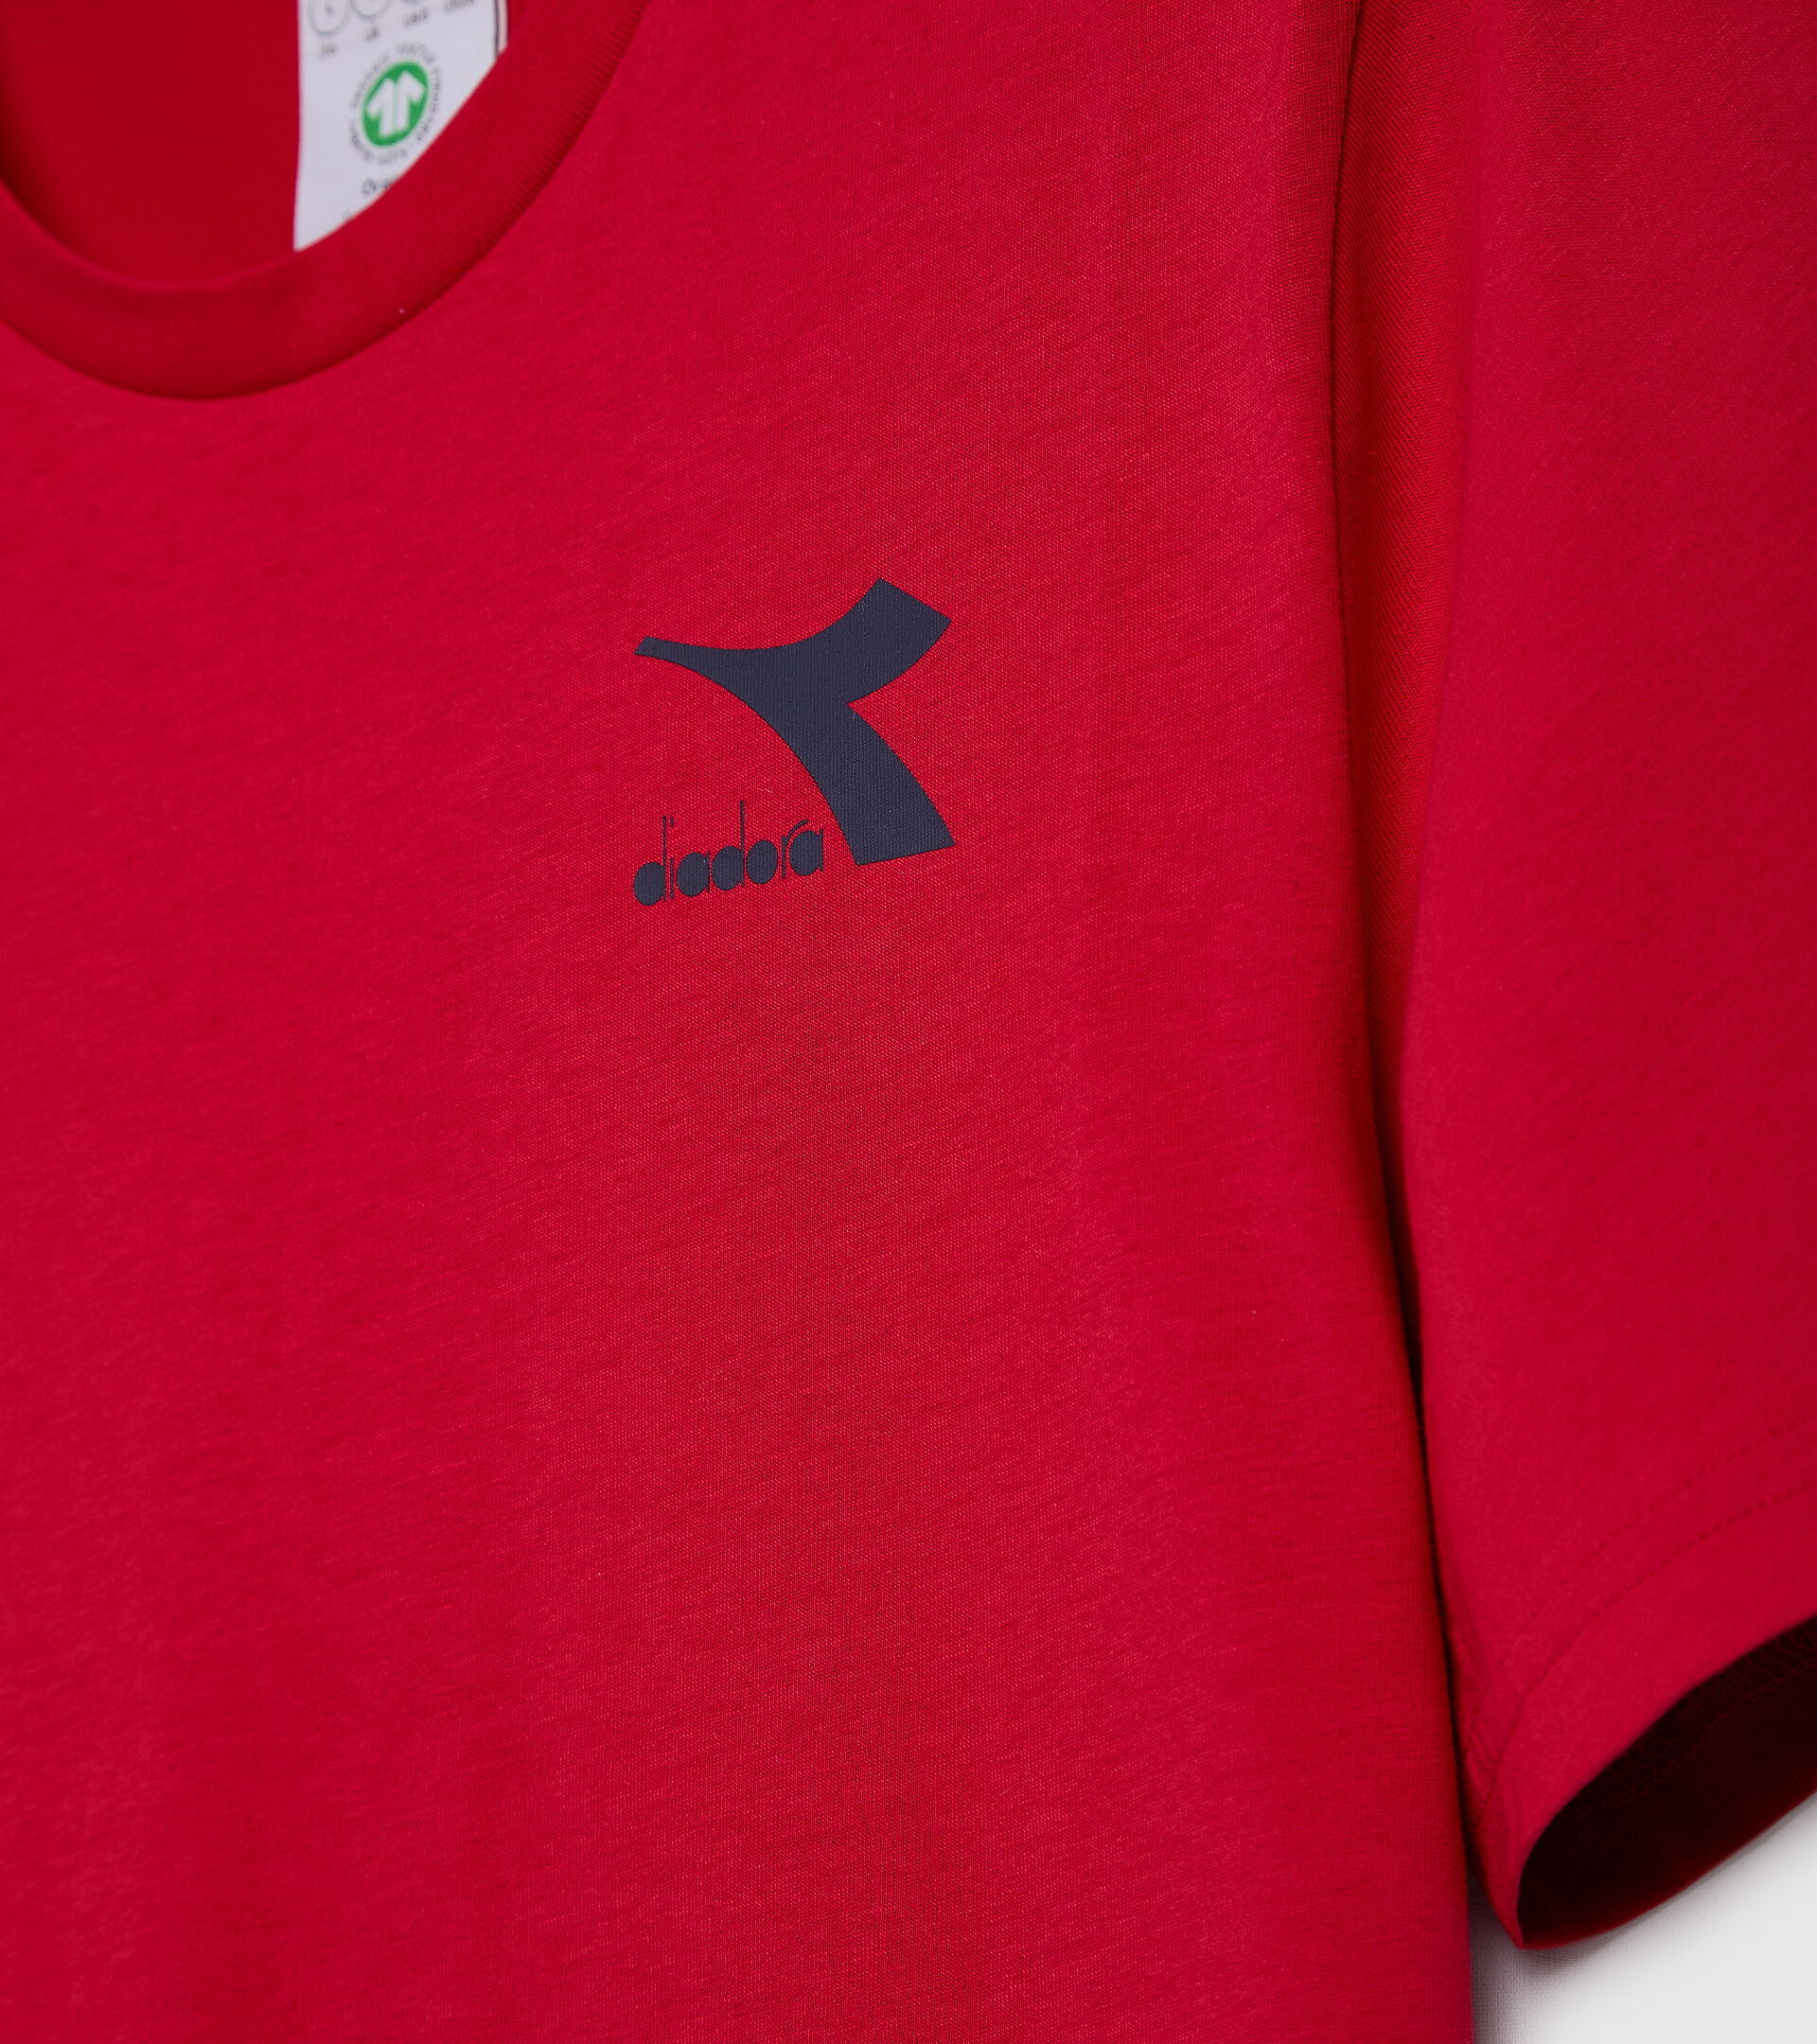 T-shirt - Men T-SHIRT SS CHROMIA TANGO RED - Diadora